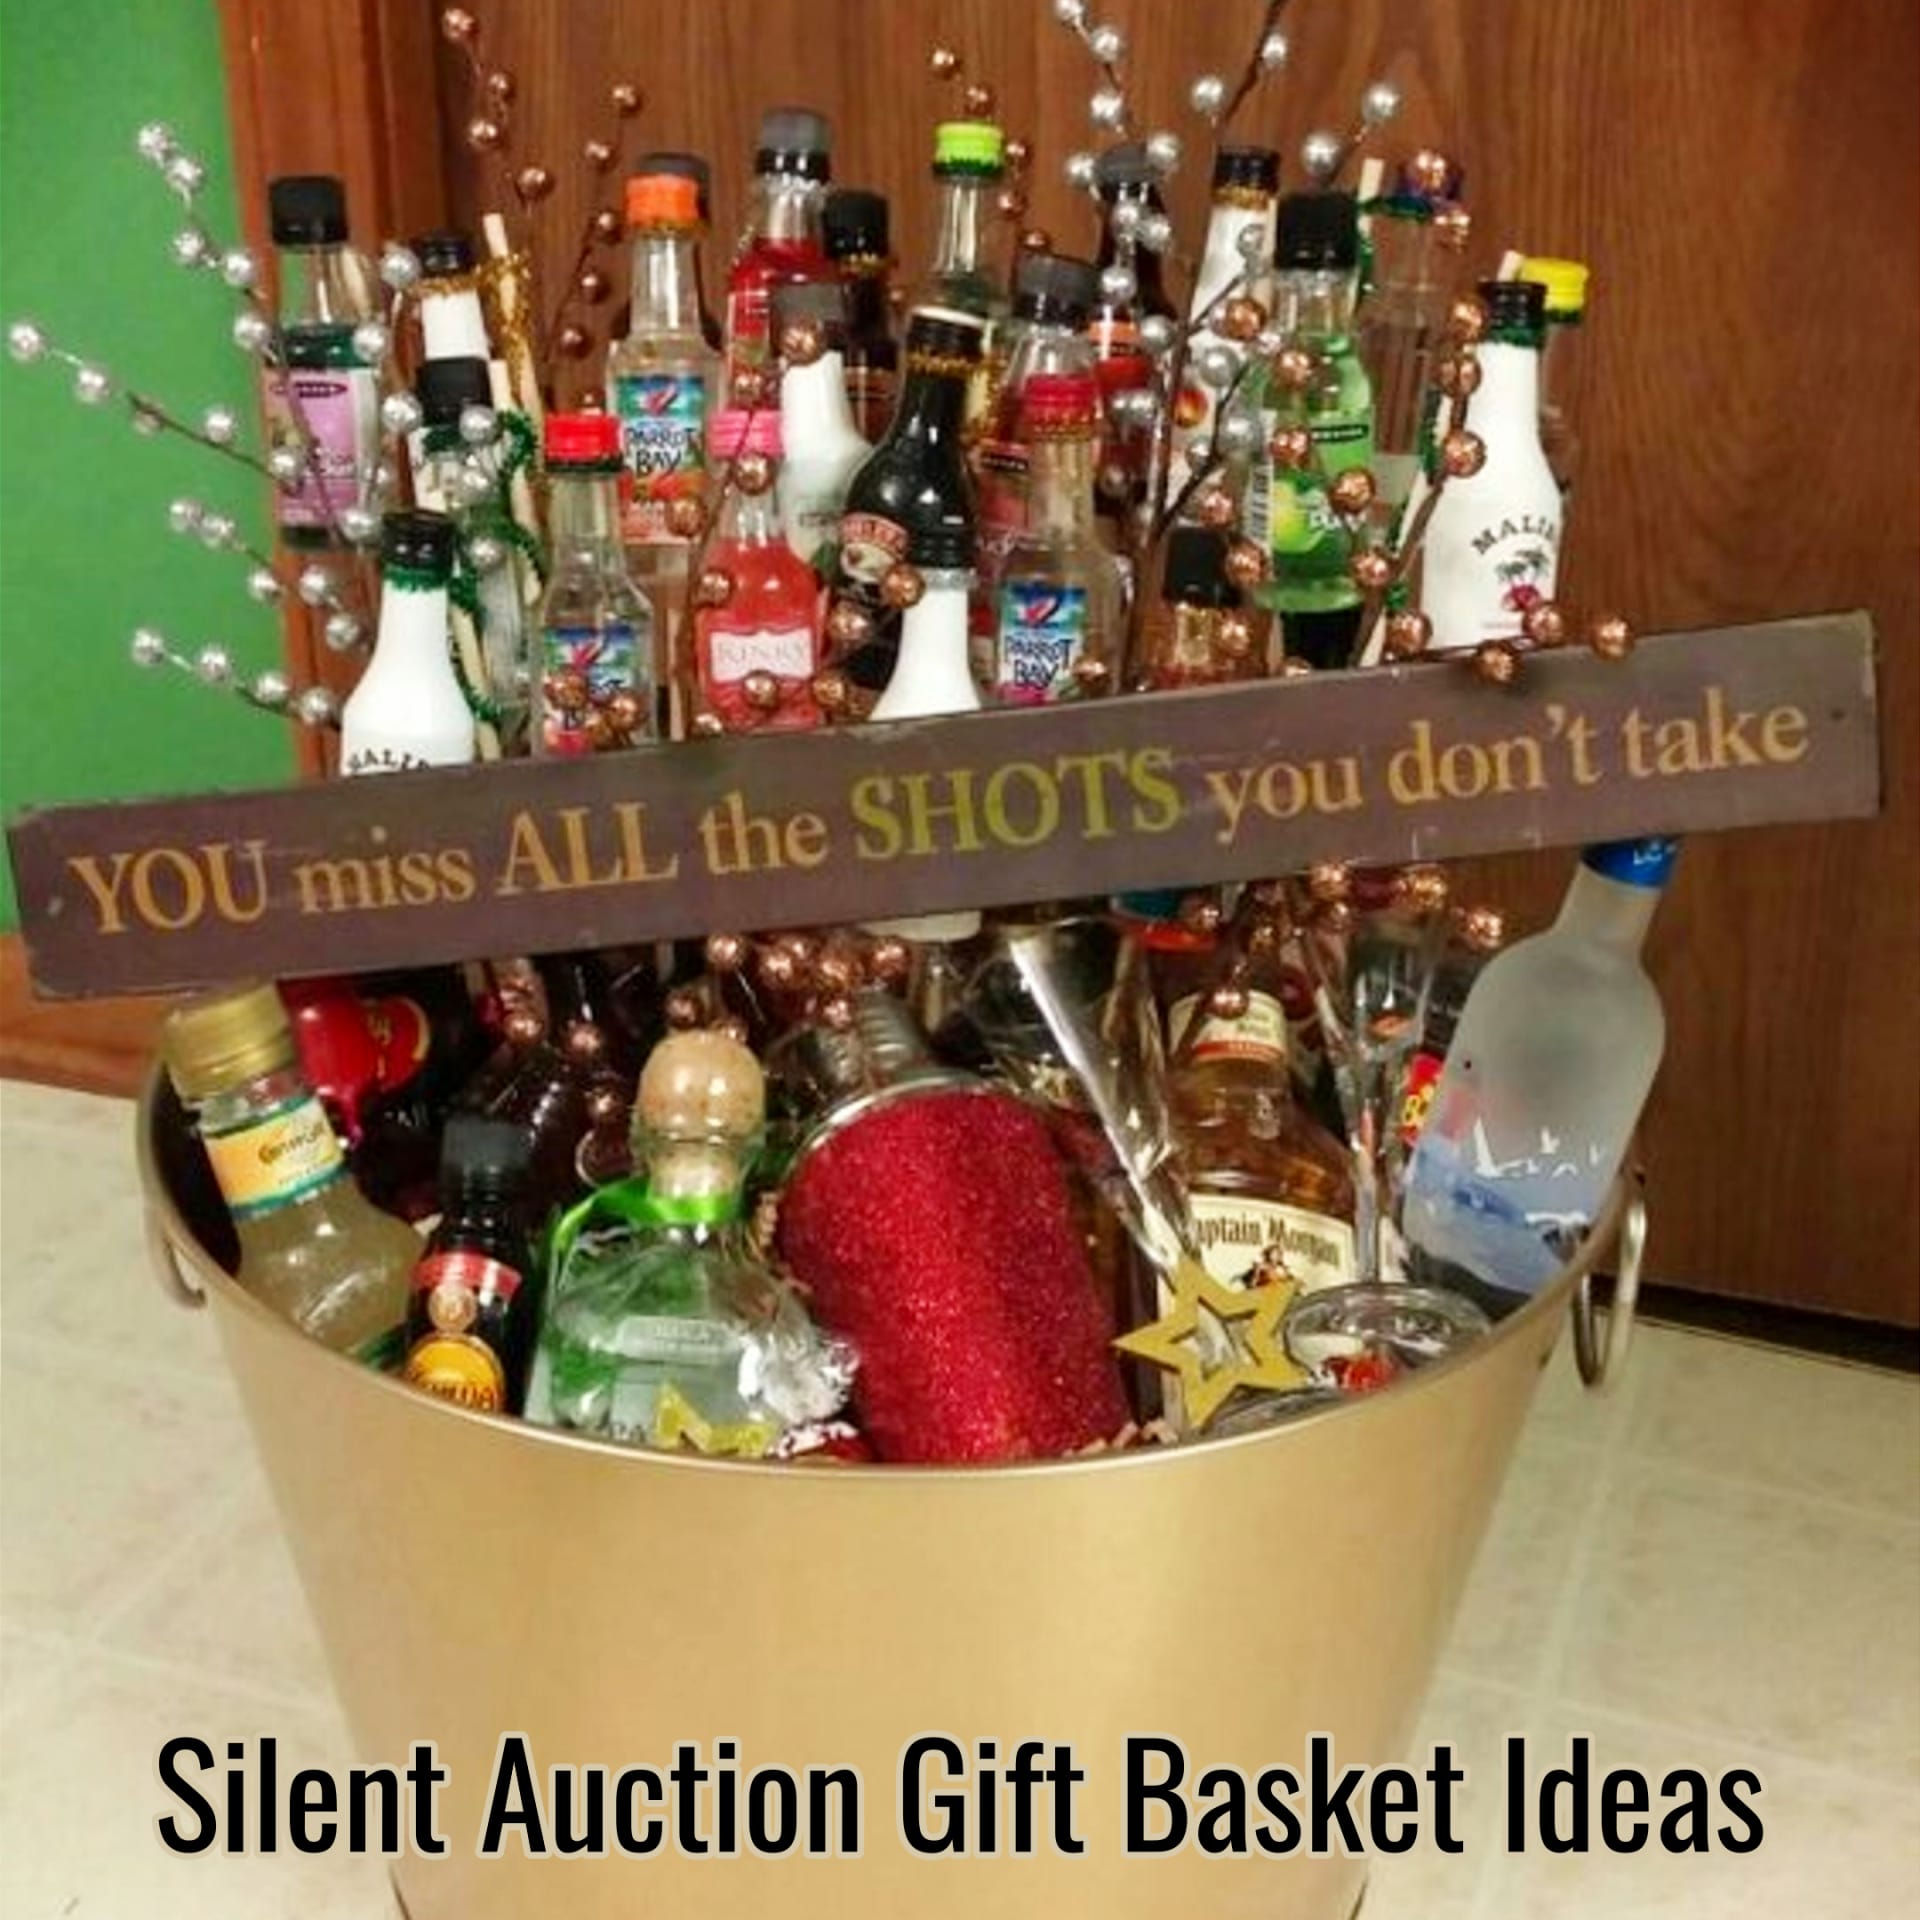 Silent auction gift basket ideas and raffle basket ideas for fundraisers and schools fundraising evens.  Unique and creative silent auction gift basket ideas